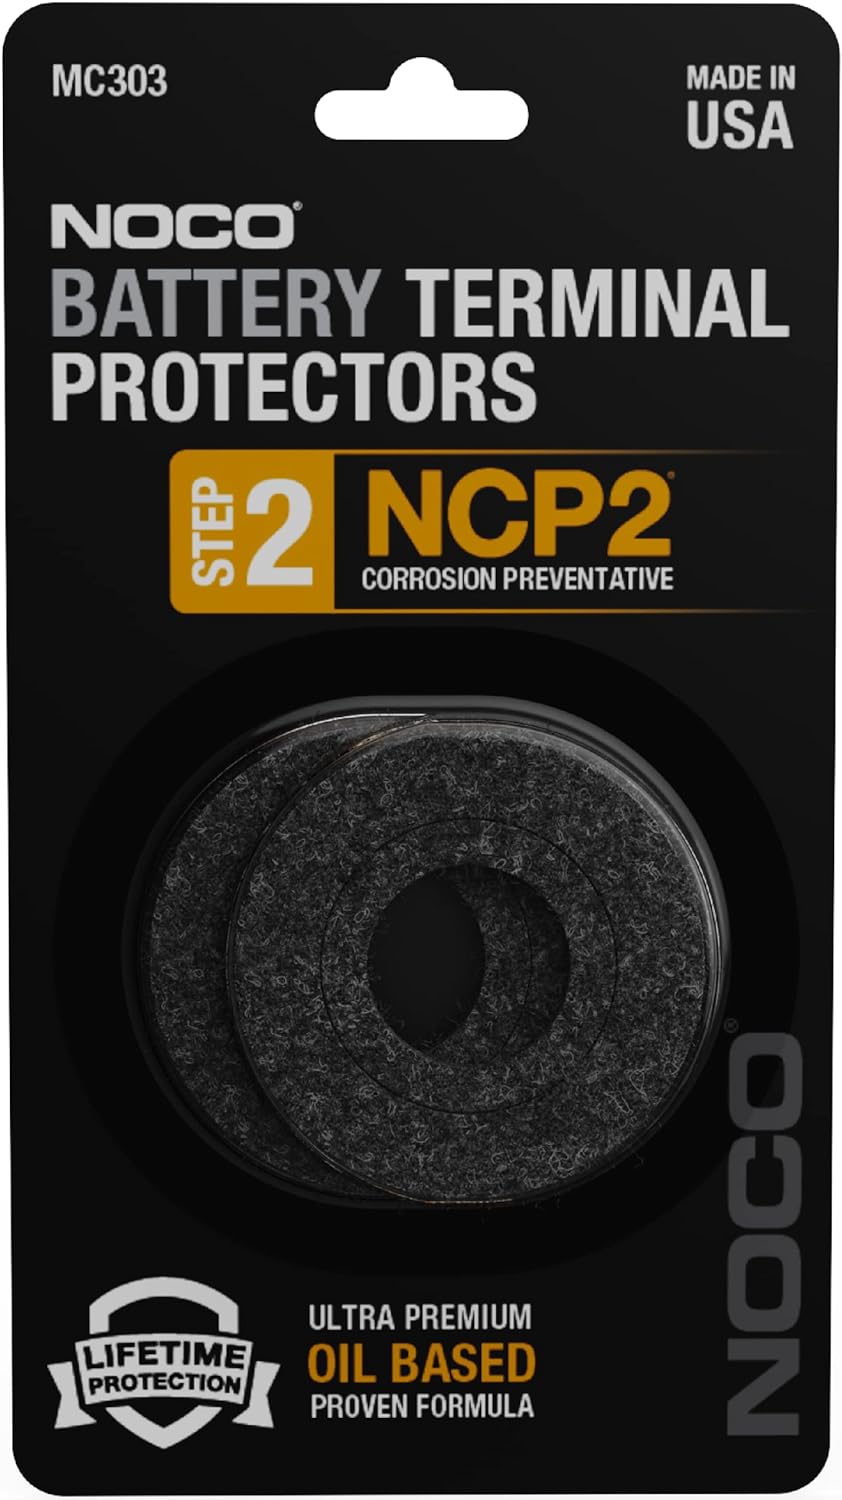 NOCO NCP2 Battery Terminal Protectors